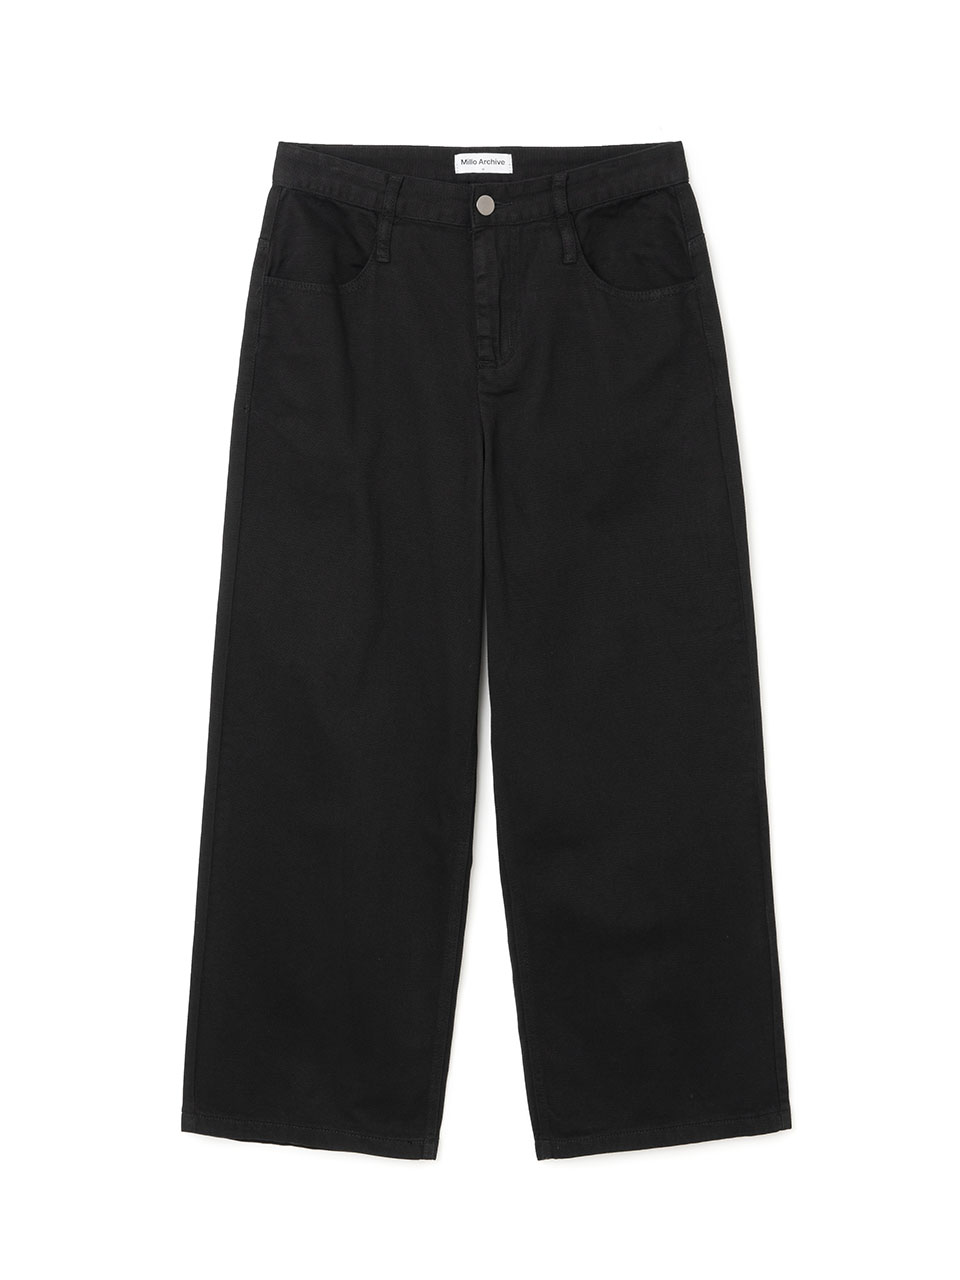 Standard Fit Denim Pants [Black]